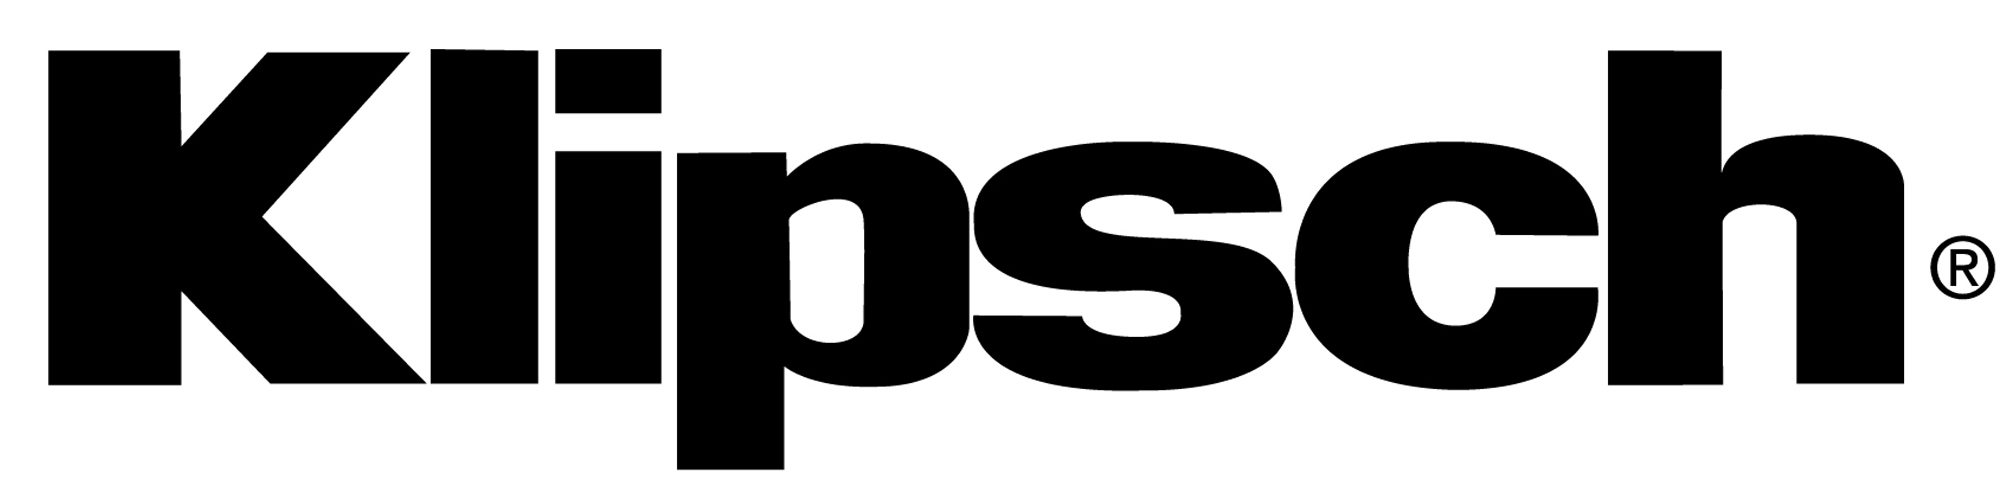 Klipsch Logo.jpg